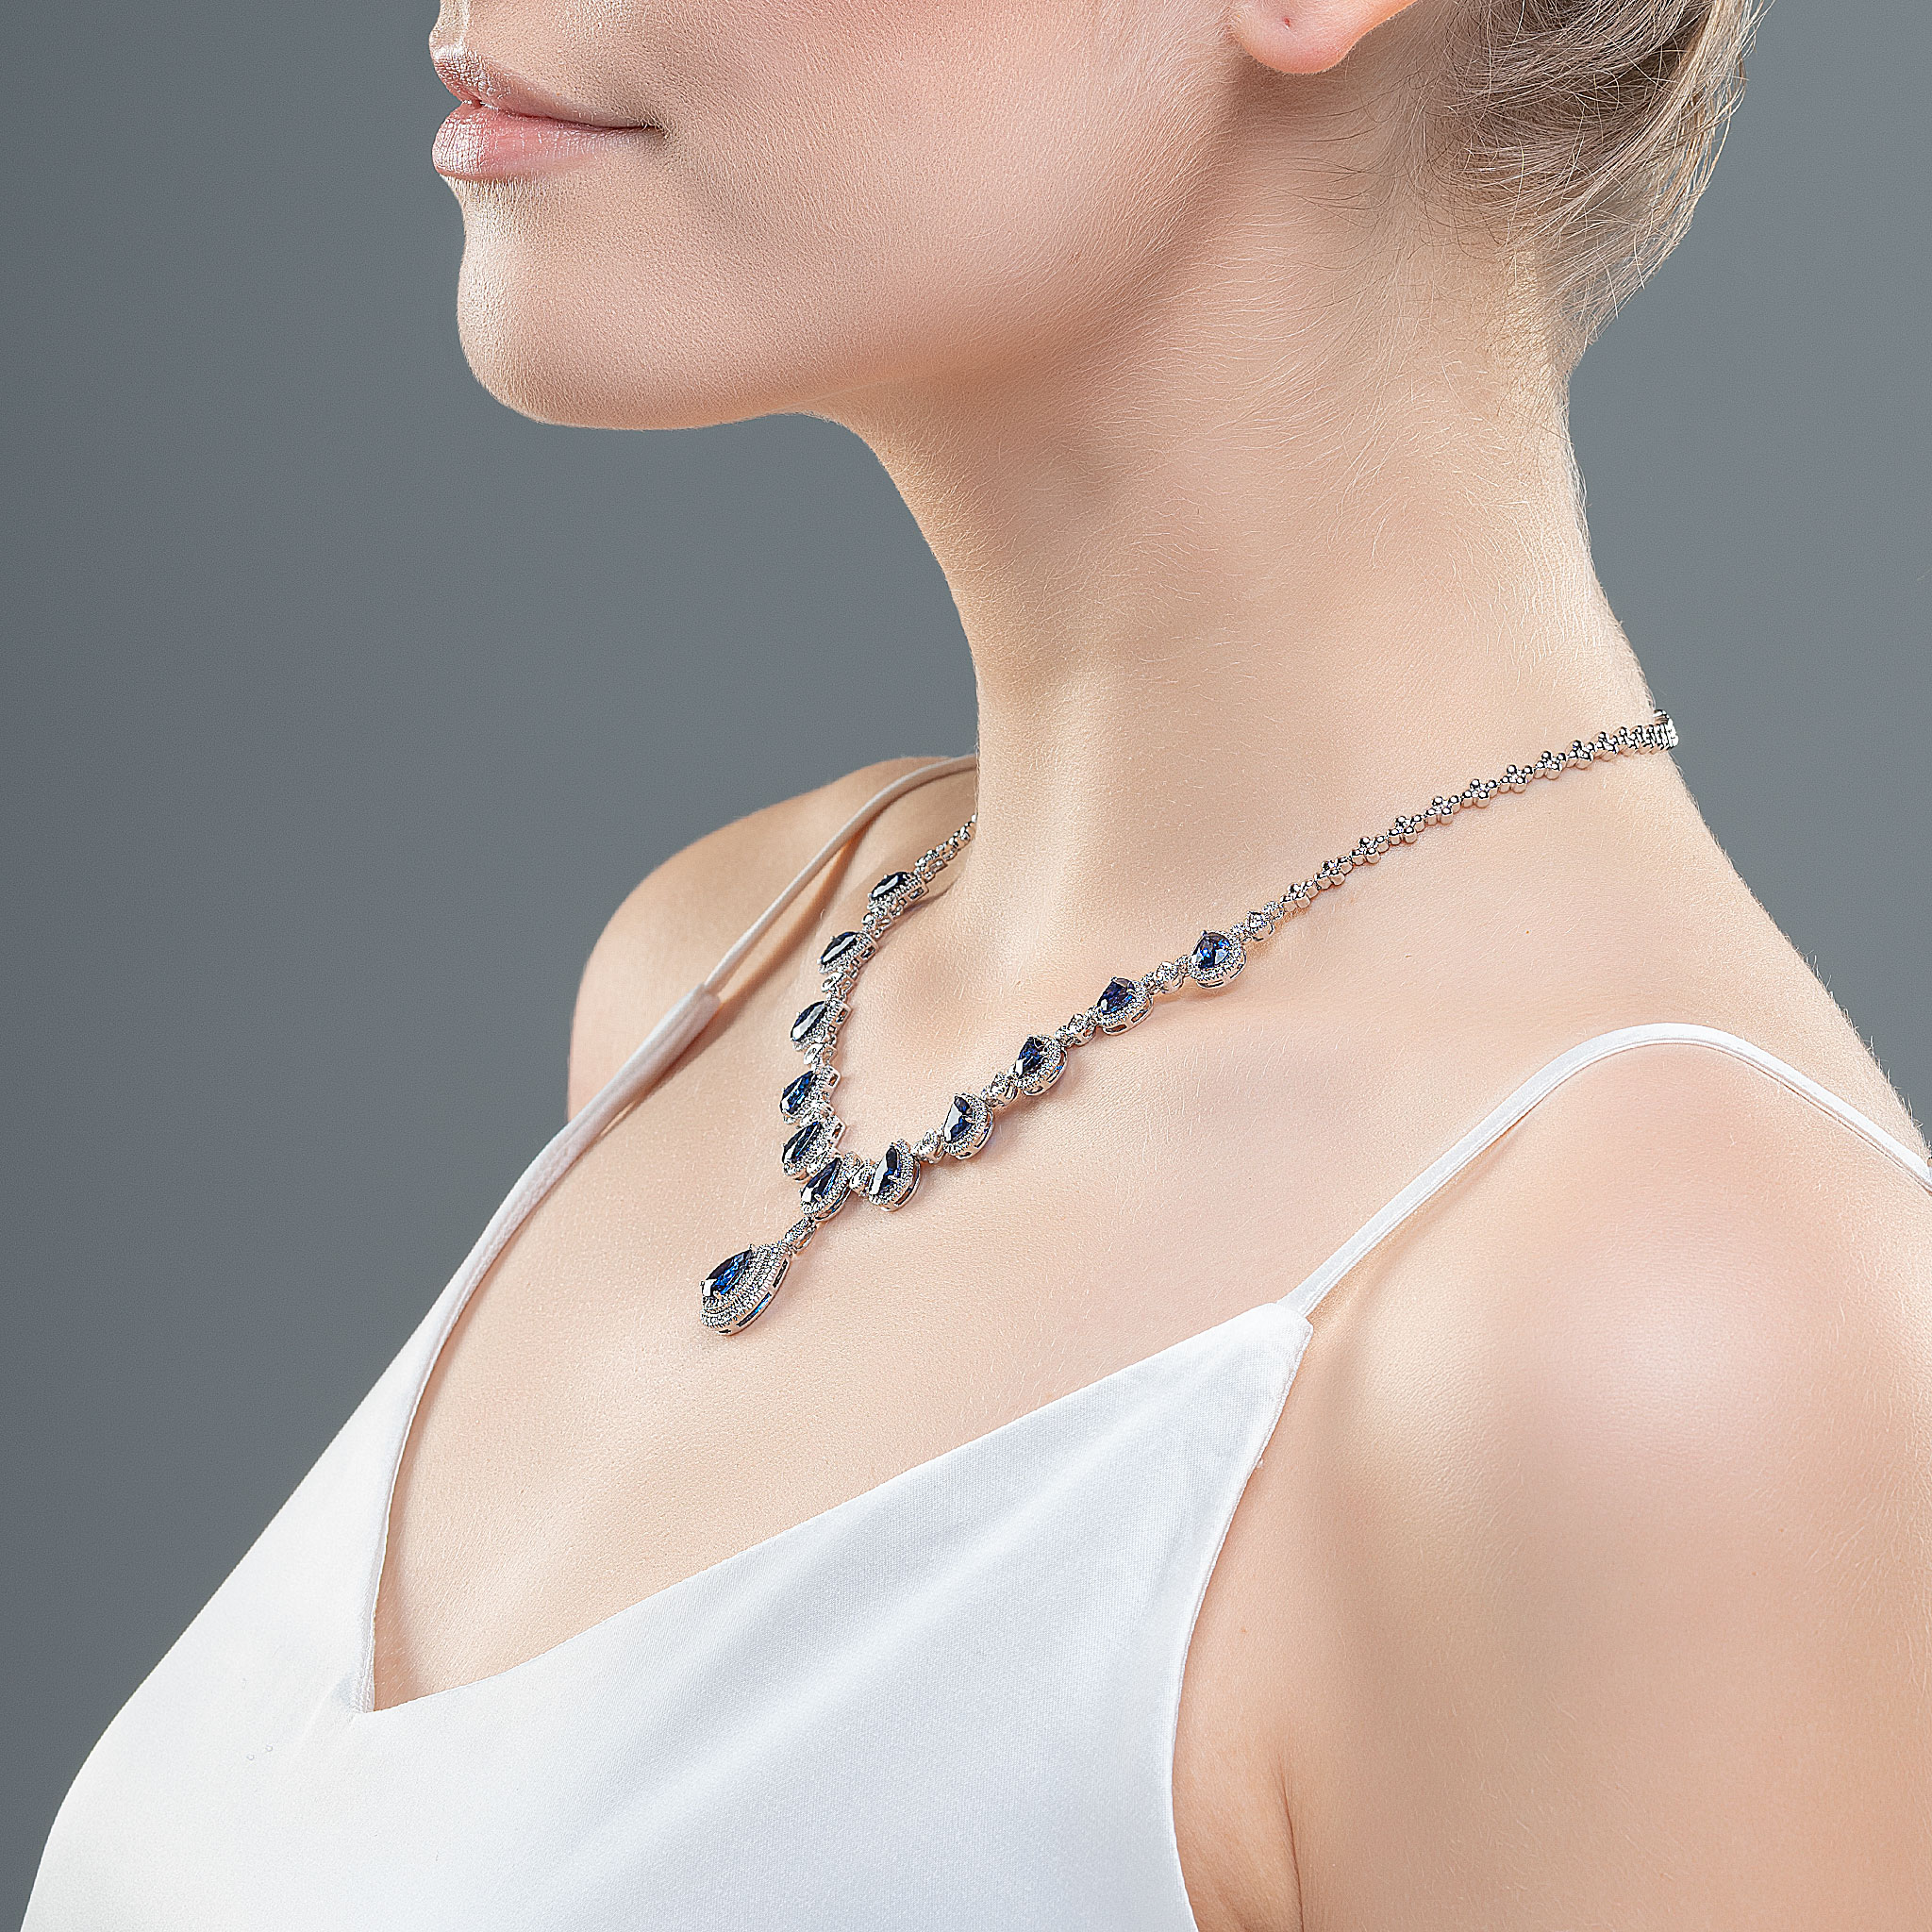 Sapphire and Diamond Necklace – Yanina-Co Jewelry